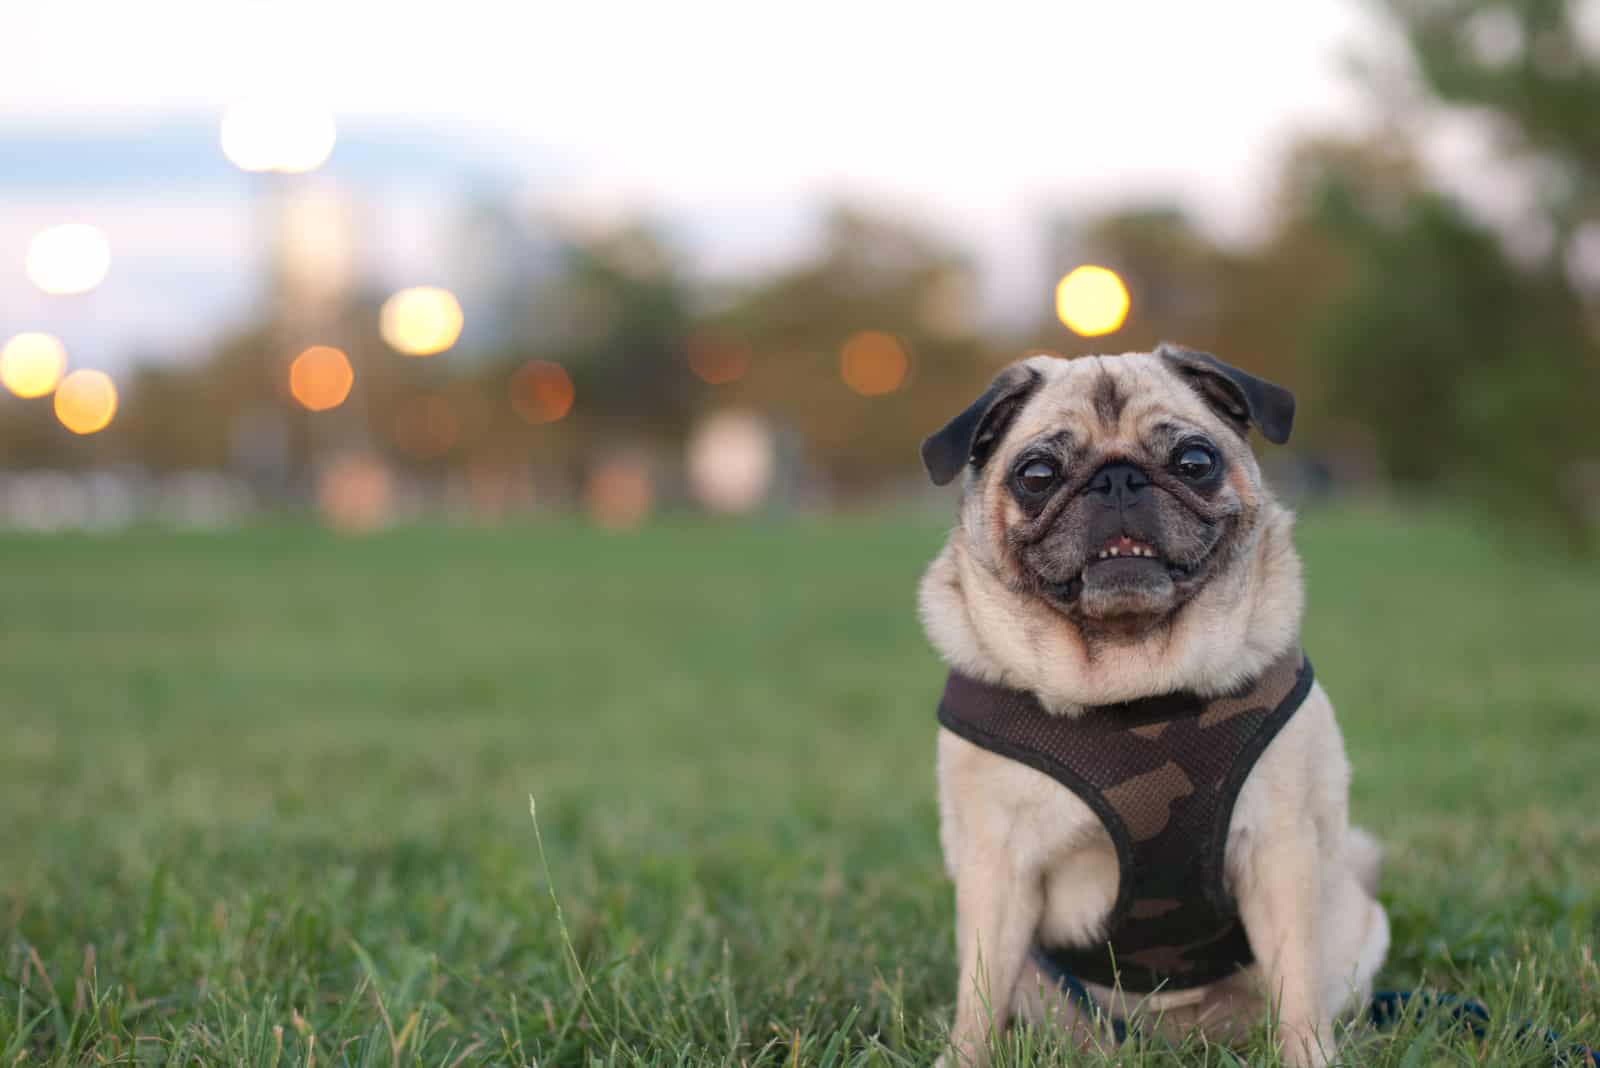 Pug sitting on grass wearing harness